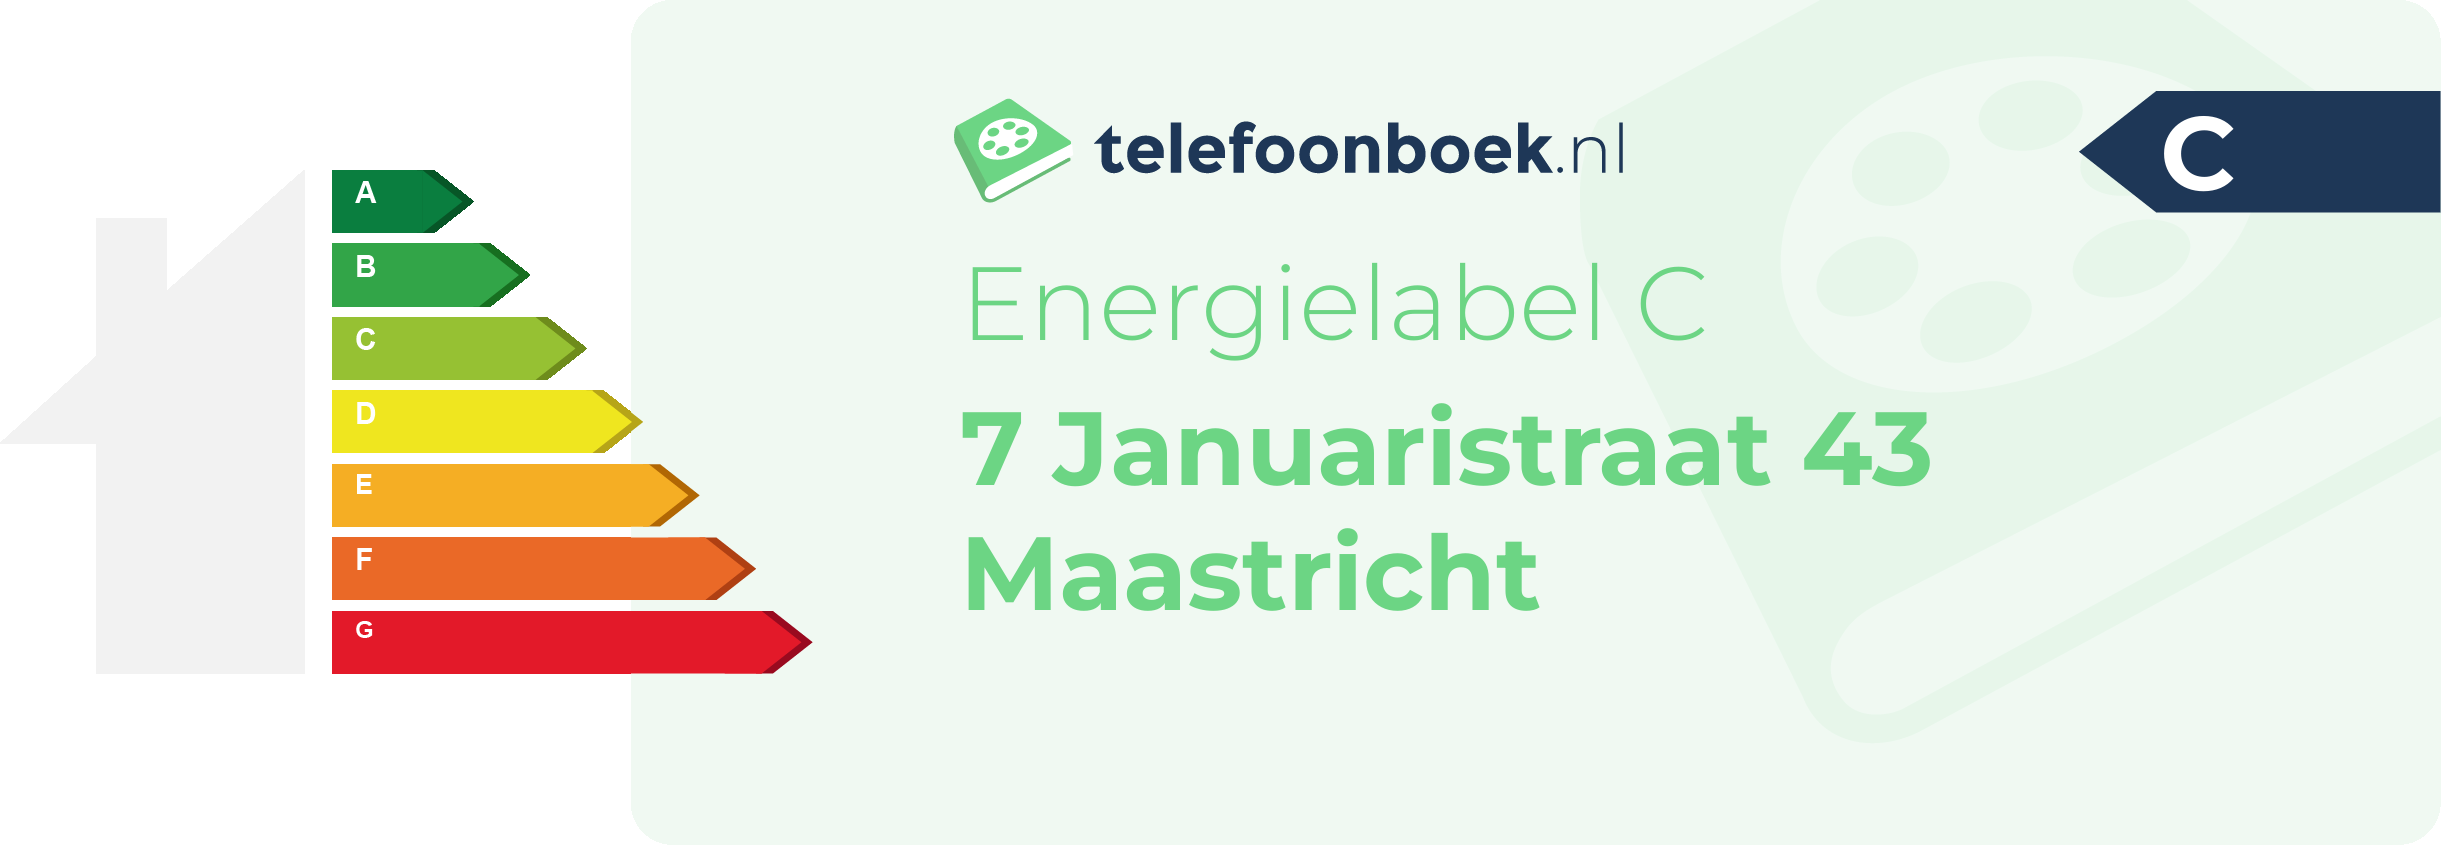 Energielabel 7 Januaristraat 43 Maastricht